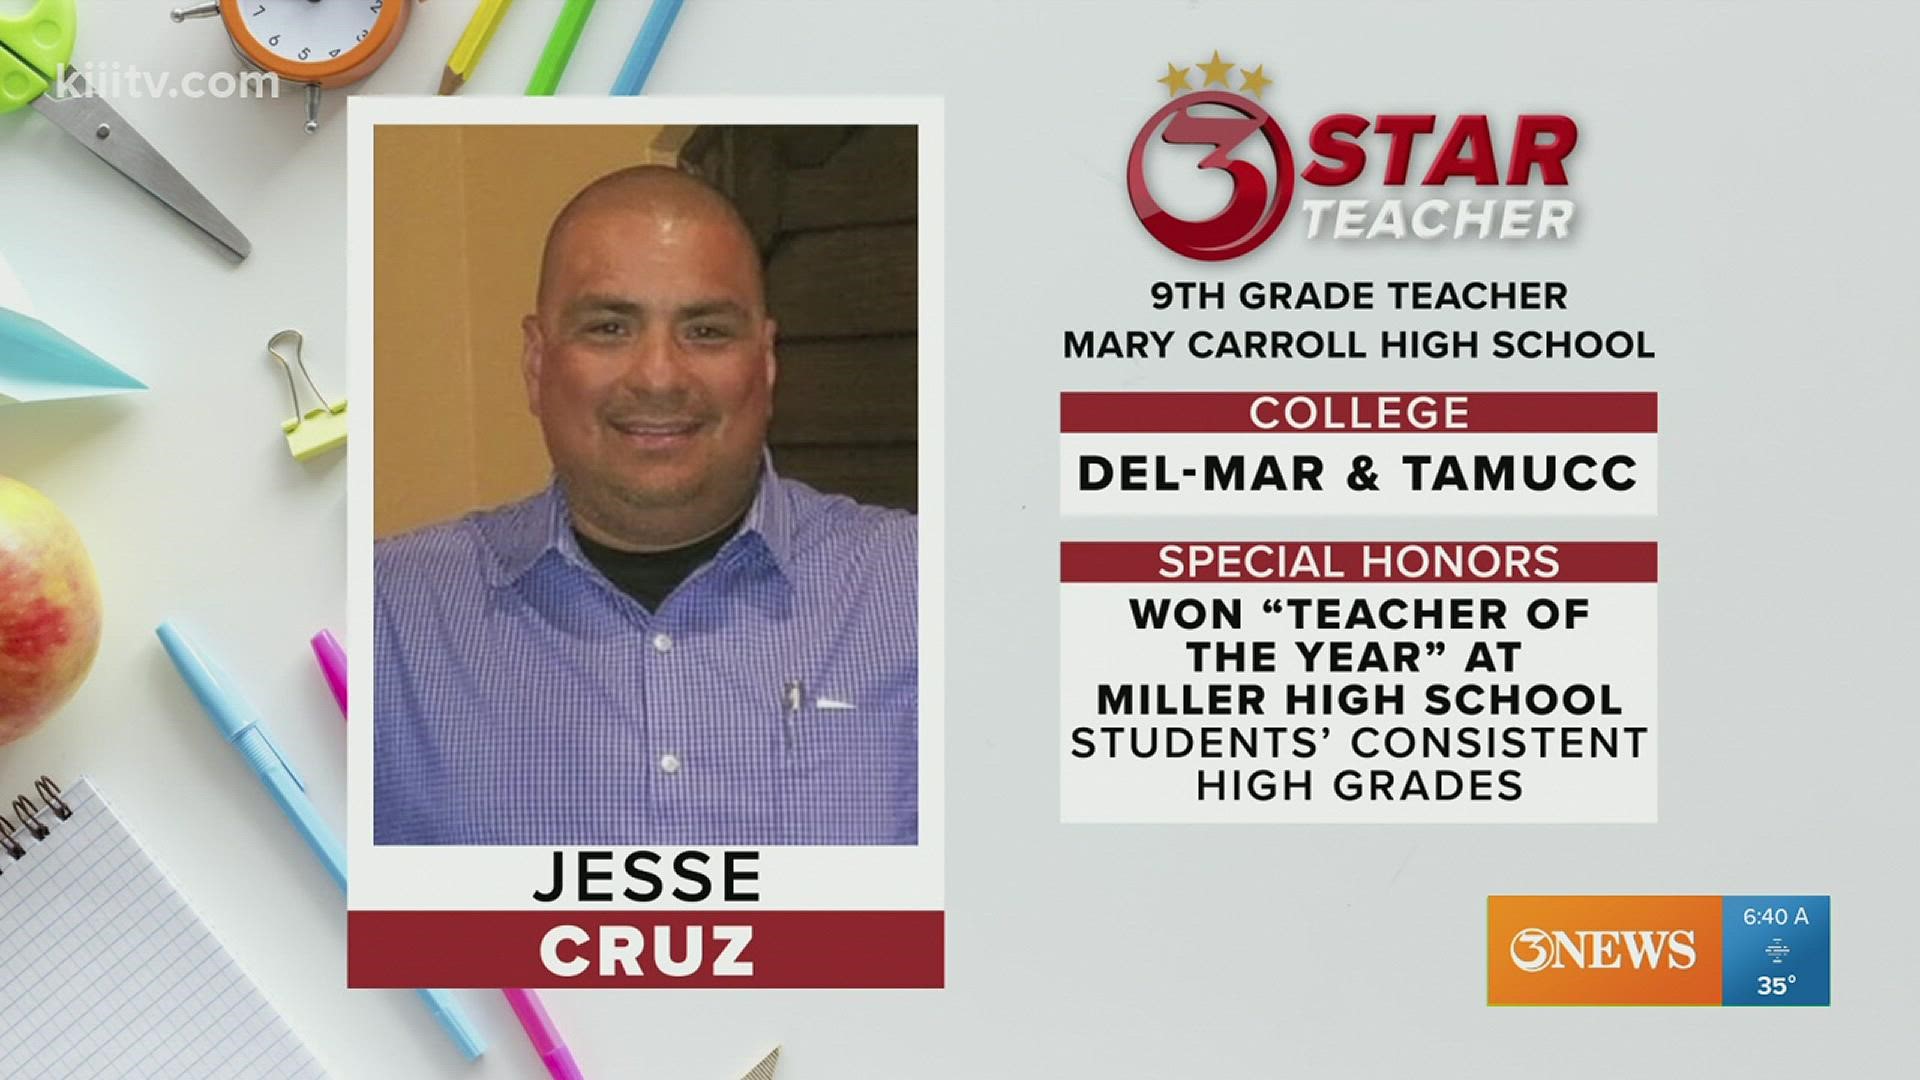 Meet our 3Star Teacher for this week: Jesse Cruz!